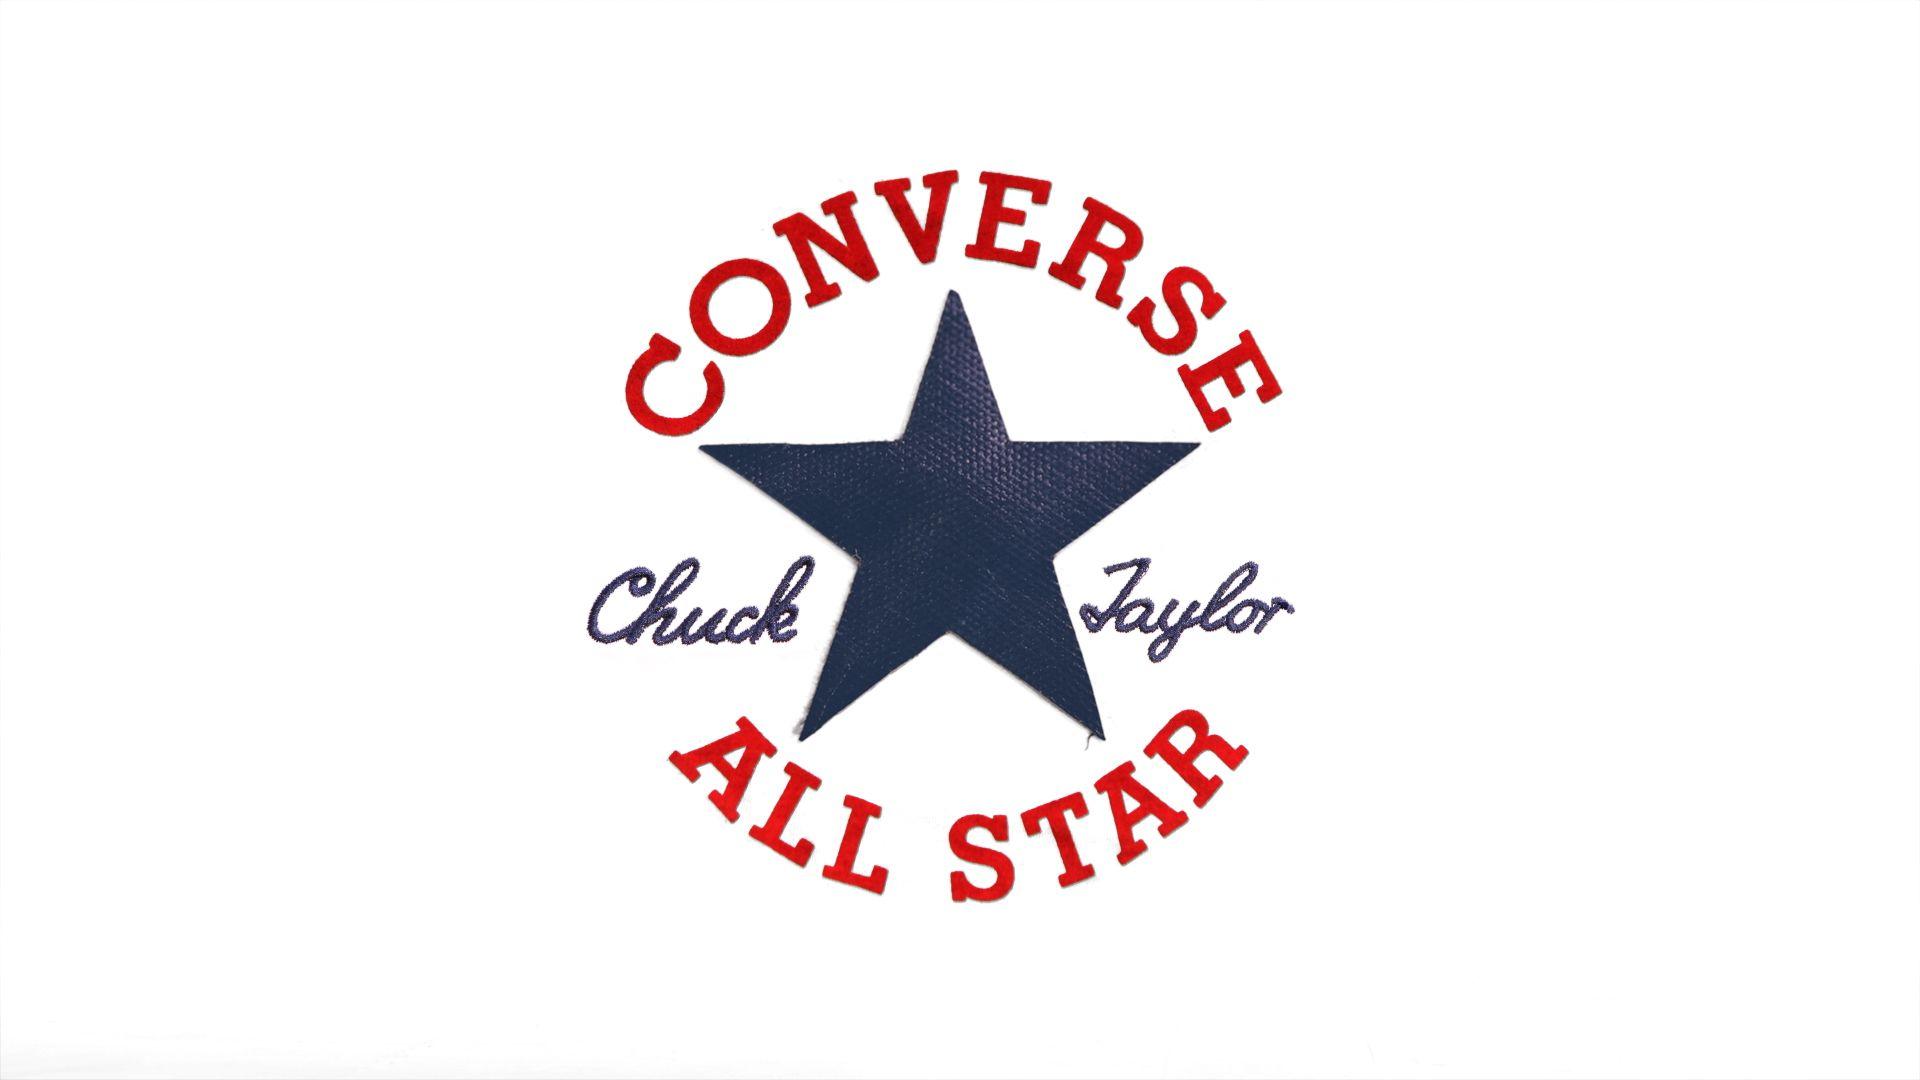 Converse Logo Wallpapers - Top Free Converse Logo ...